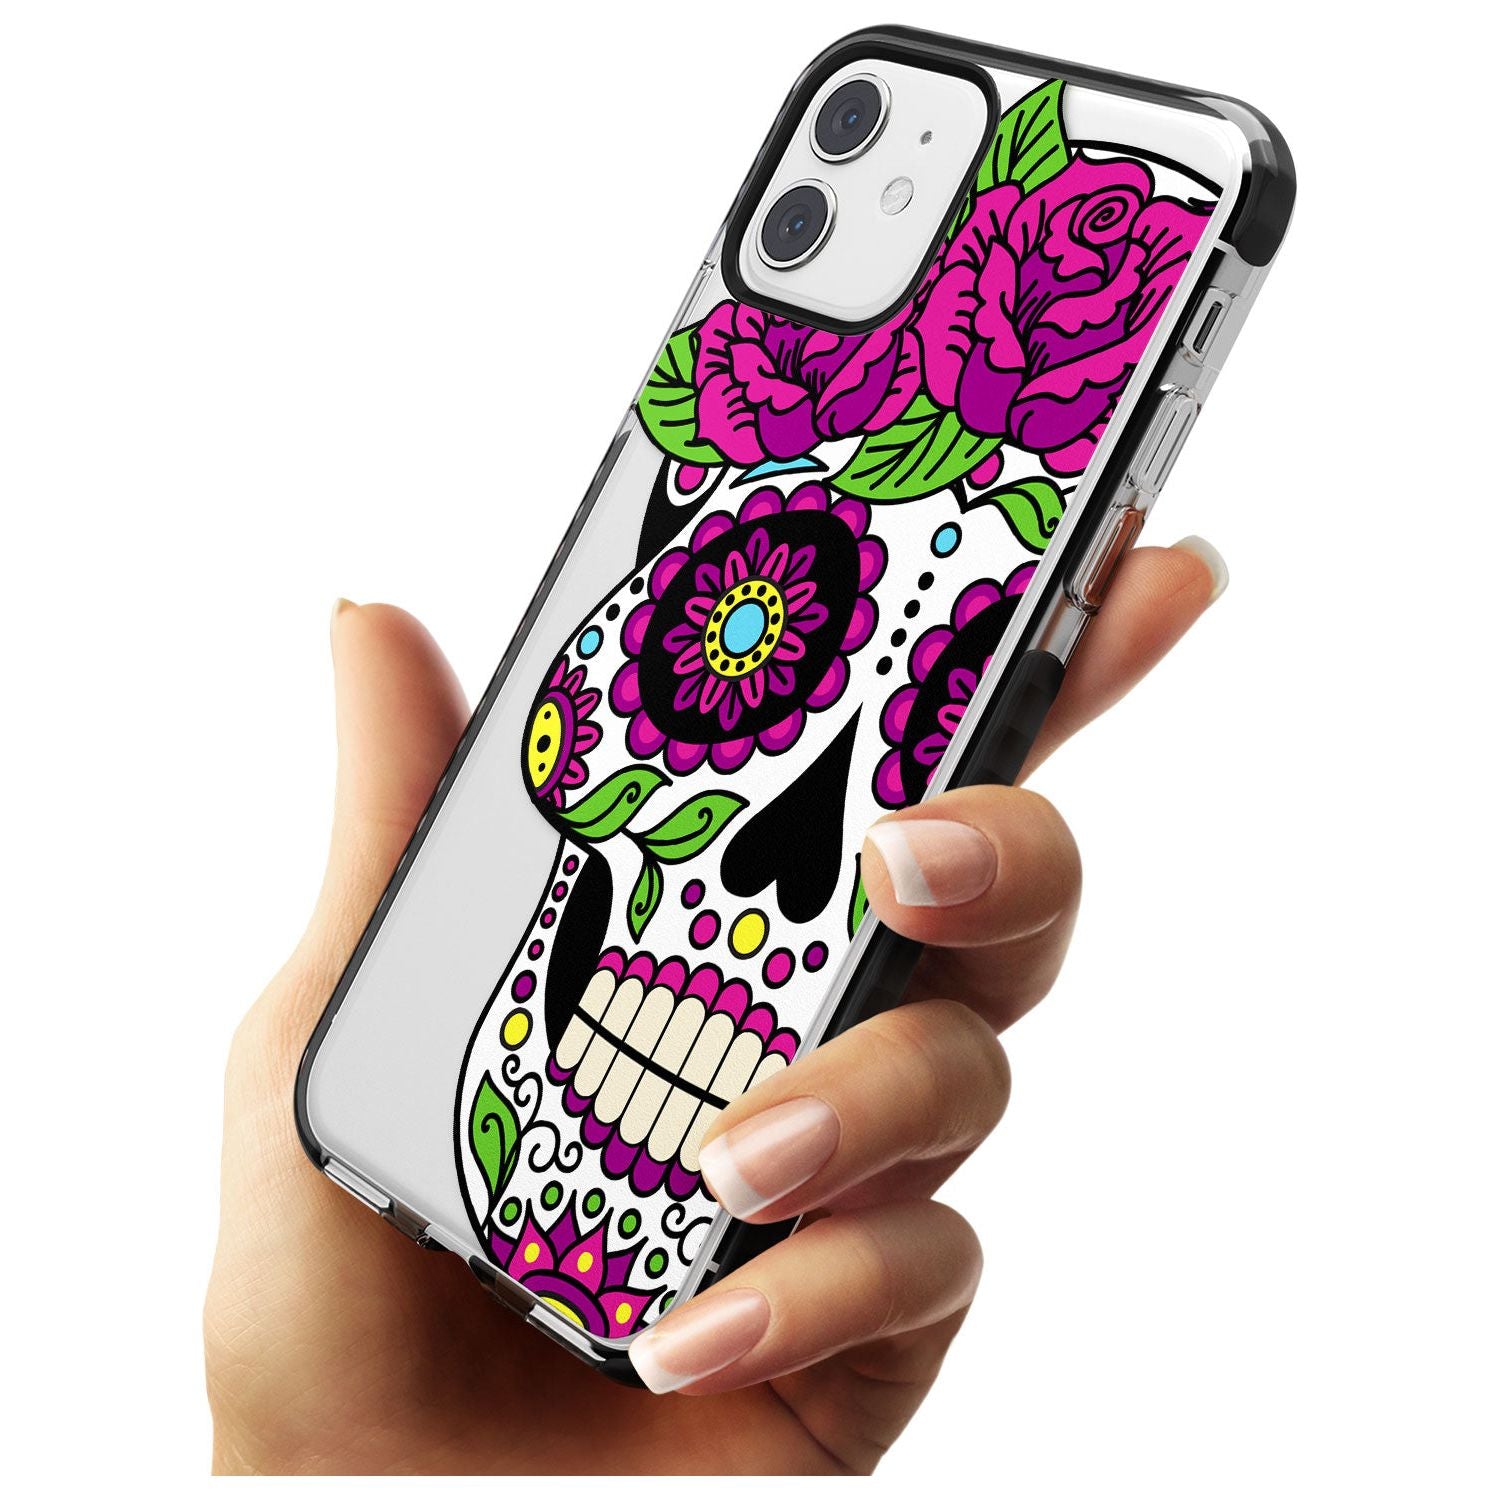 Purple Floral Sugar Skull Black Impact Phone Case for iPhone 11 Pro Max